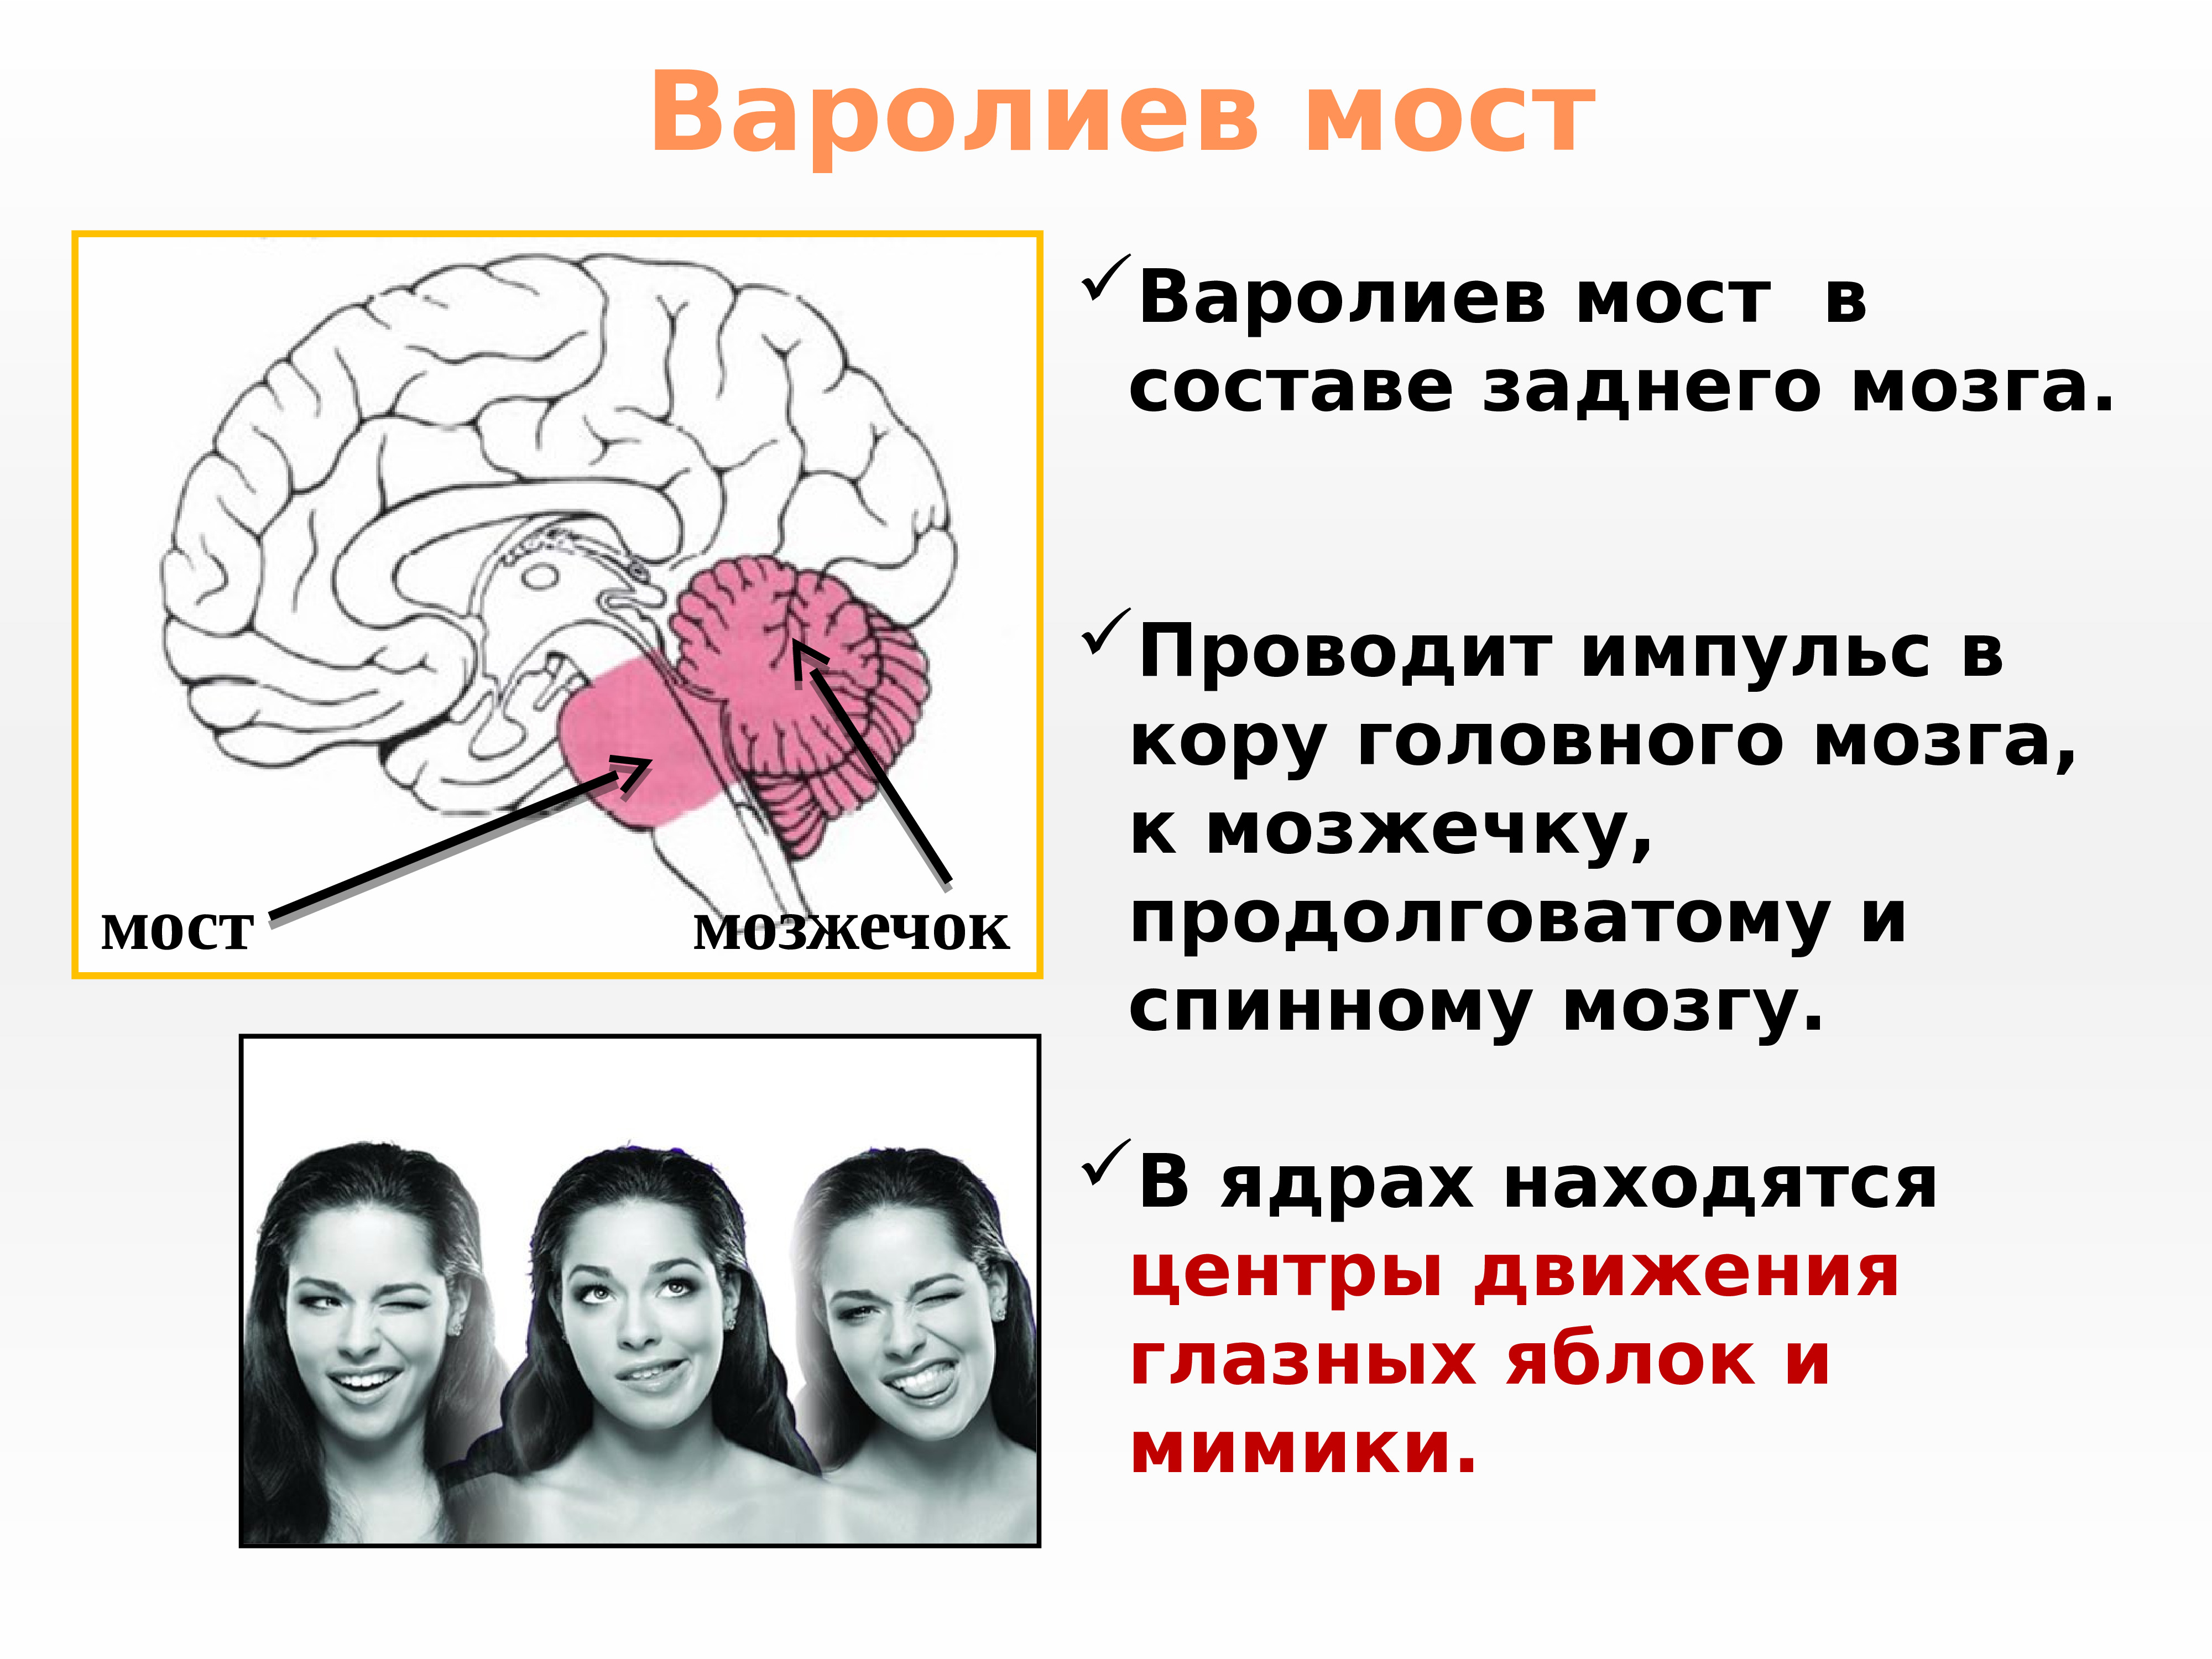 Мост структуры мозга. Головной мозг варолиев мост. Строение мозга варолиев мост. Варолиев мост анатомия функции. Строение головного мозга человека варолиев мост.